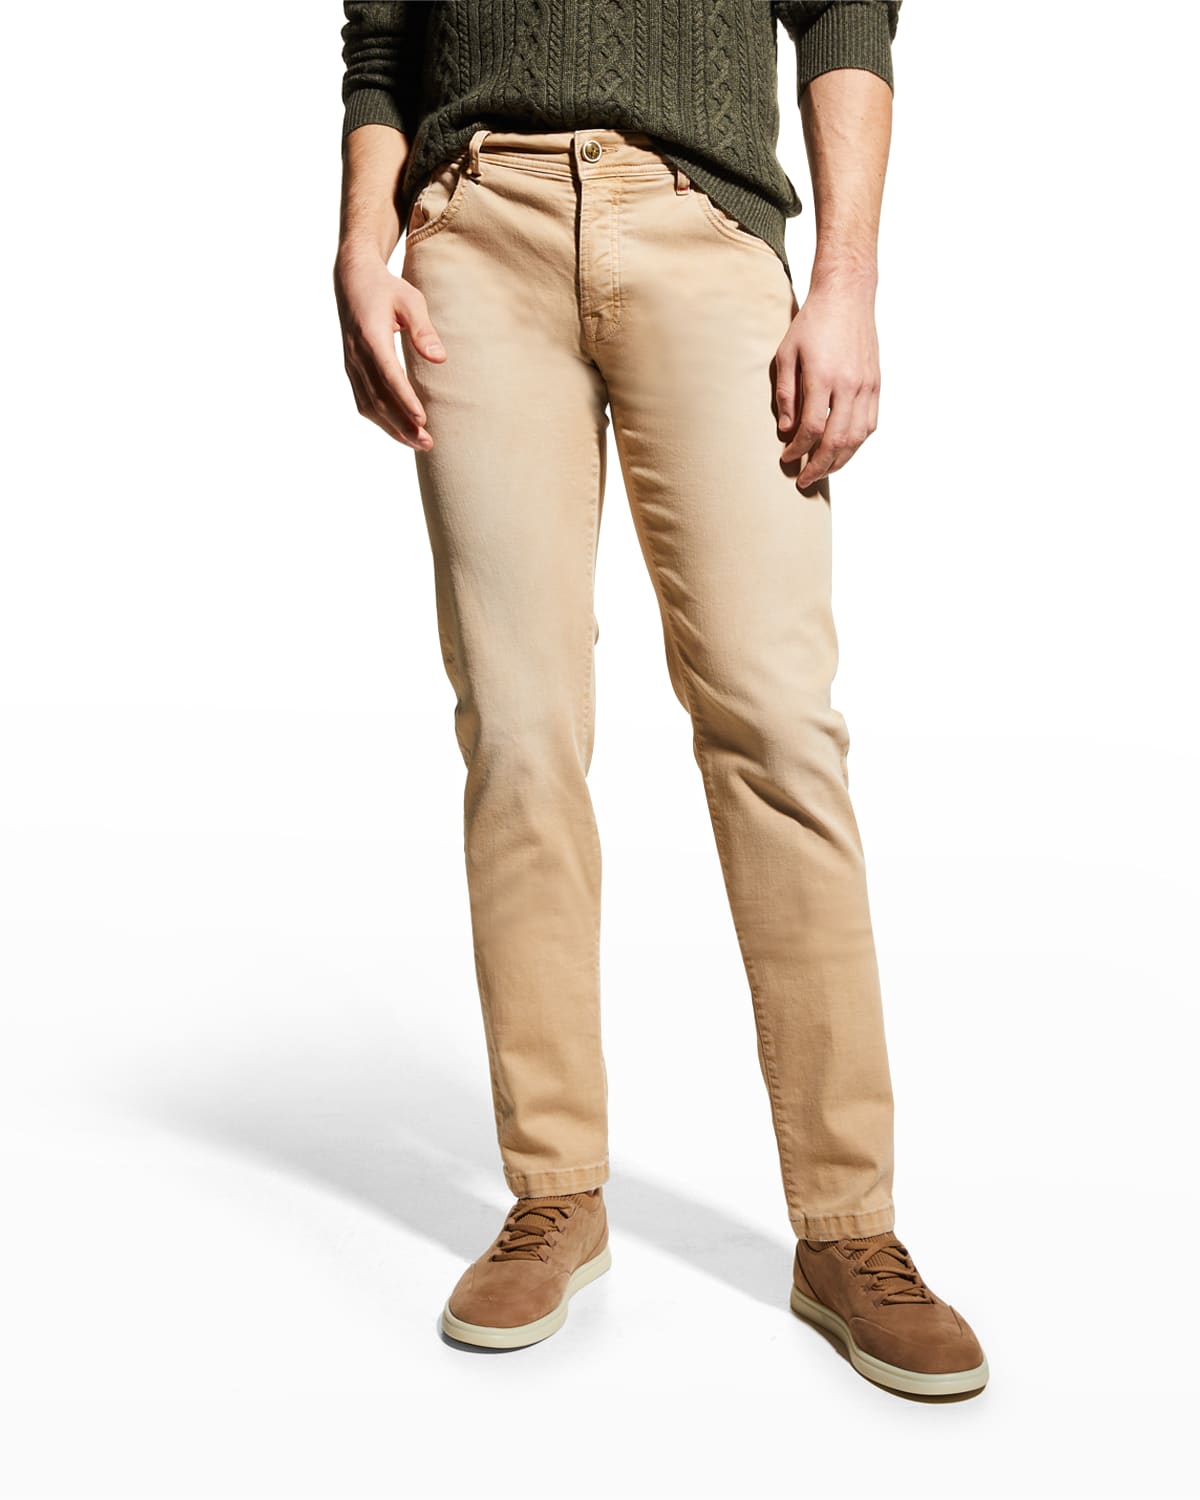 5 Sp 45 Sp Pocket Pants | Neiman Marcus